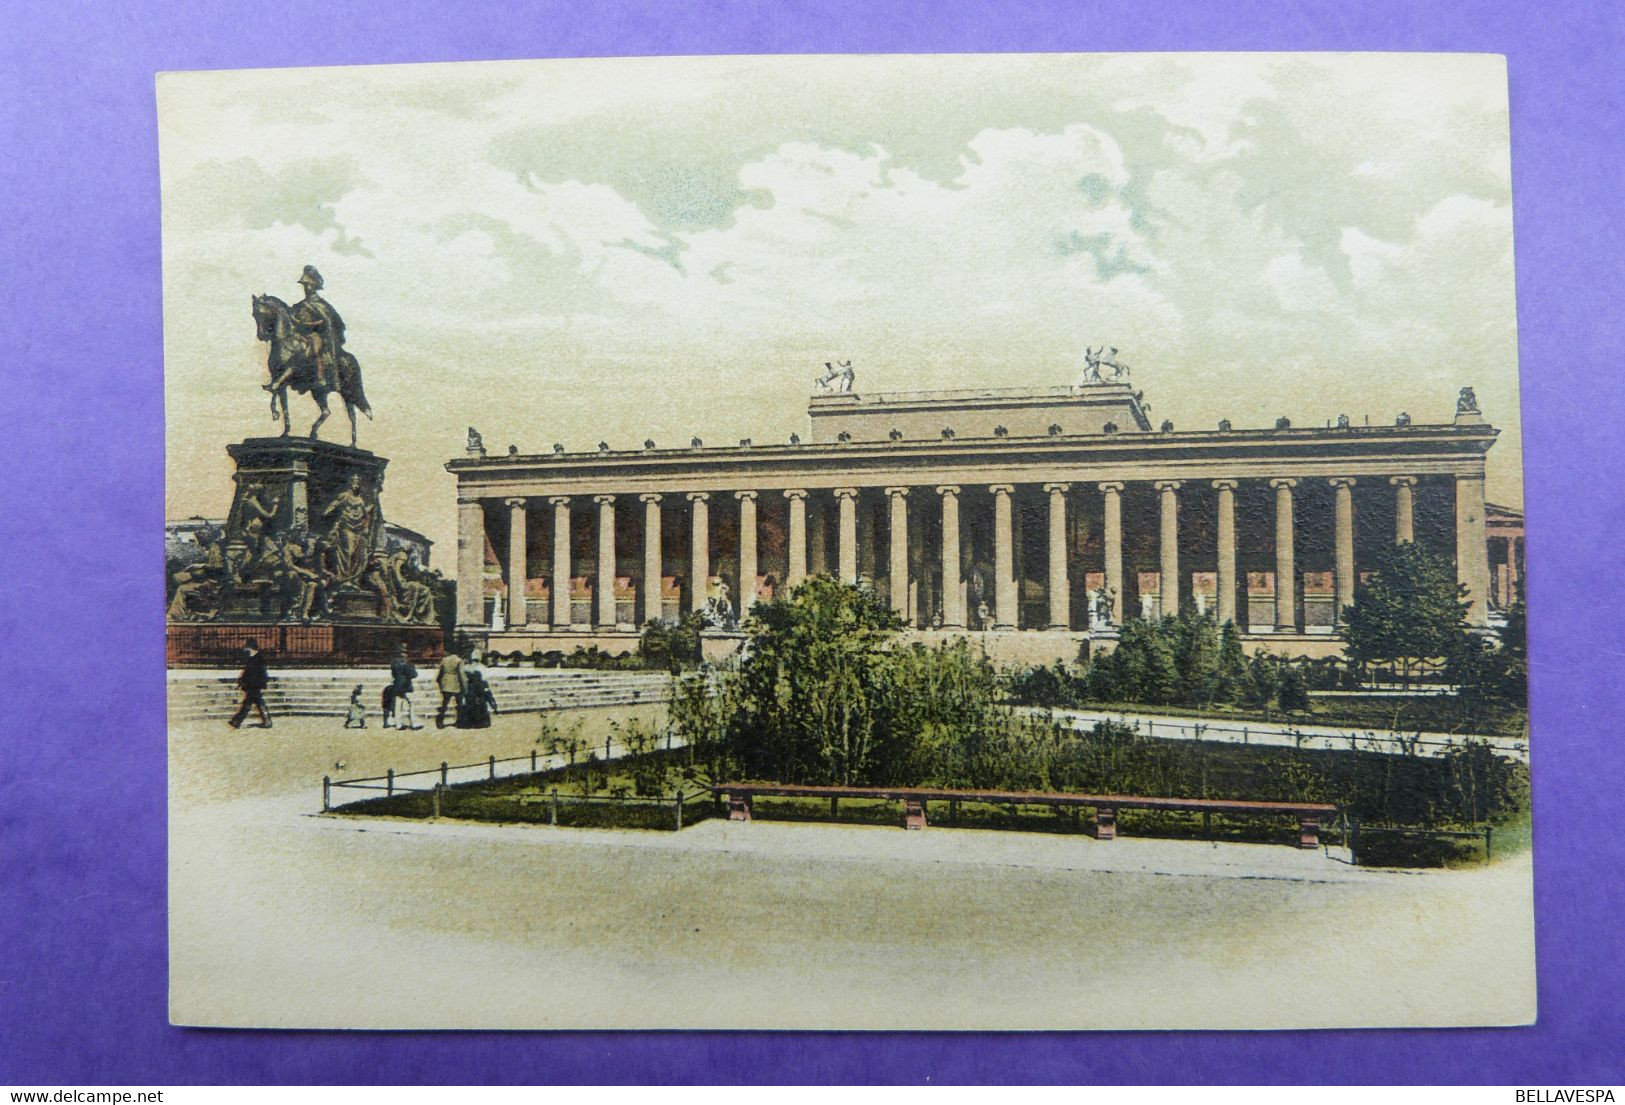 Berlin 3 x Bilder anno 1898 litho? Lithografie? Steendruk Brandenburg Tor  -Galerie & Musee F.Guillaume III-